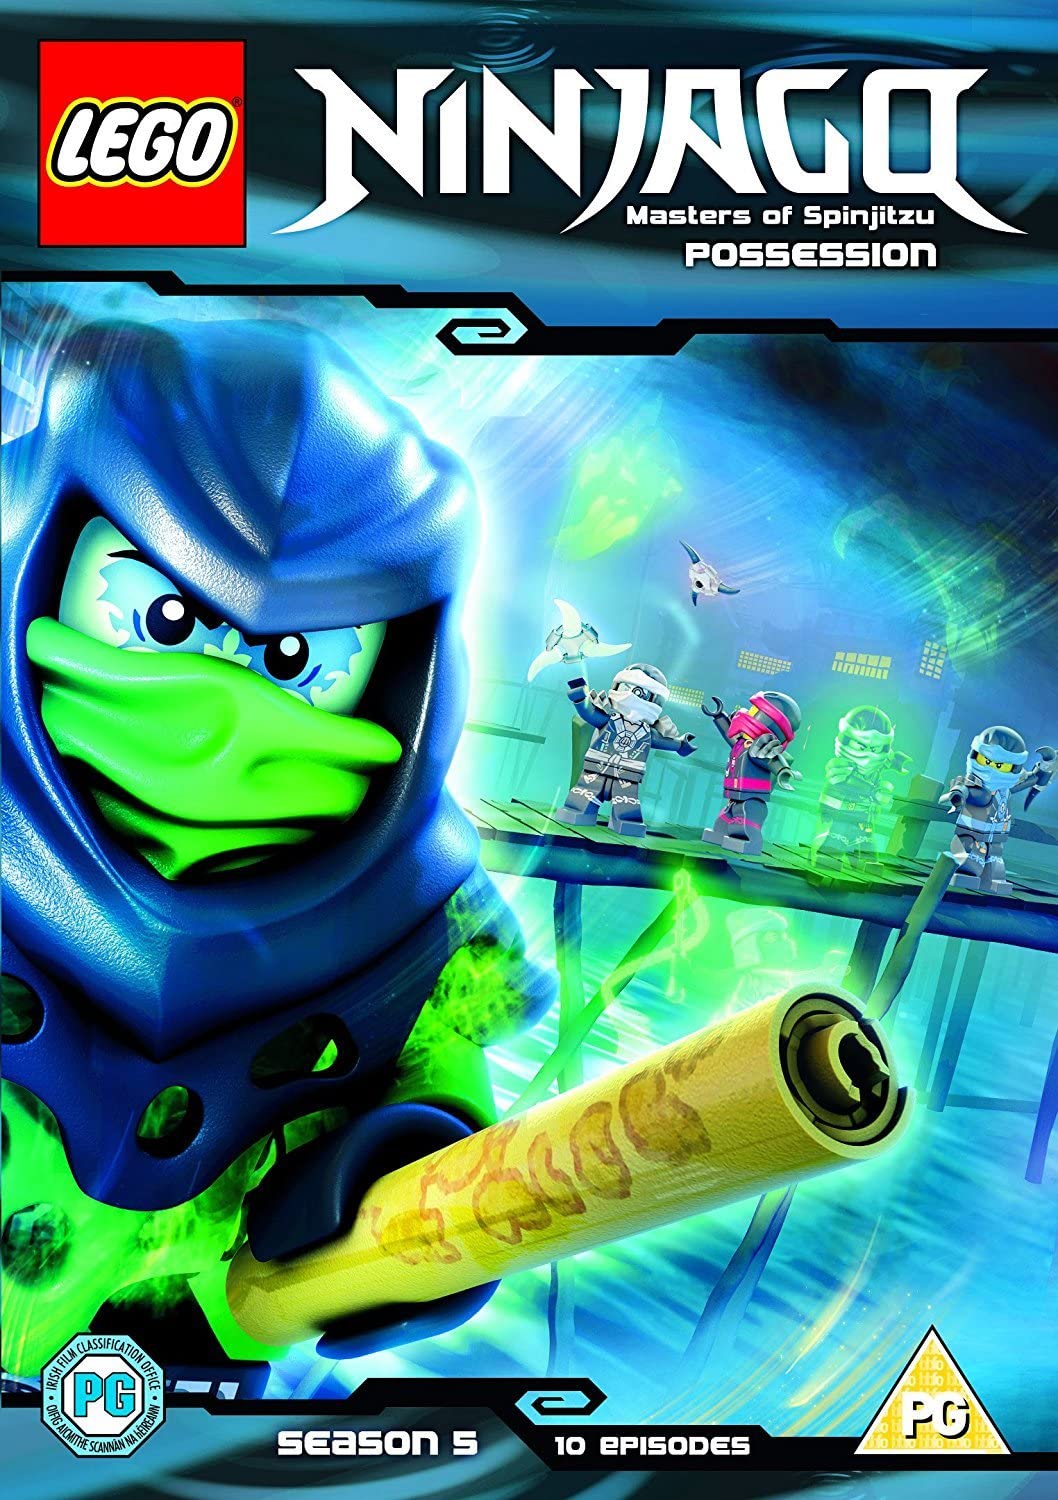 Lego Ninjago Possession [2017] – Animation [DVD]